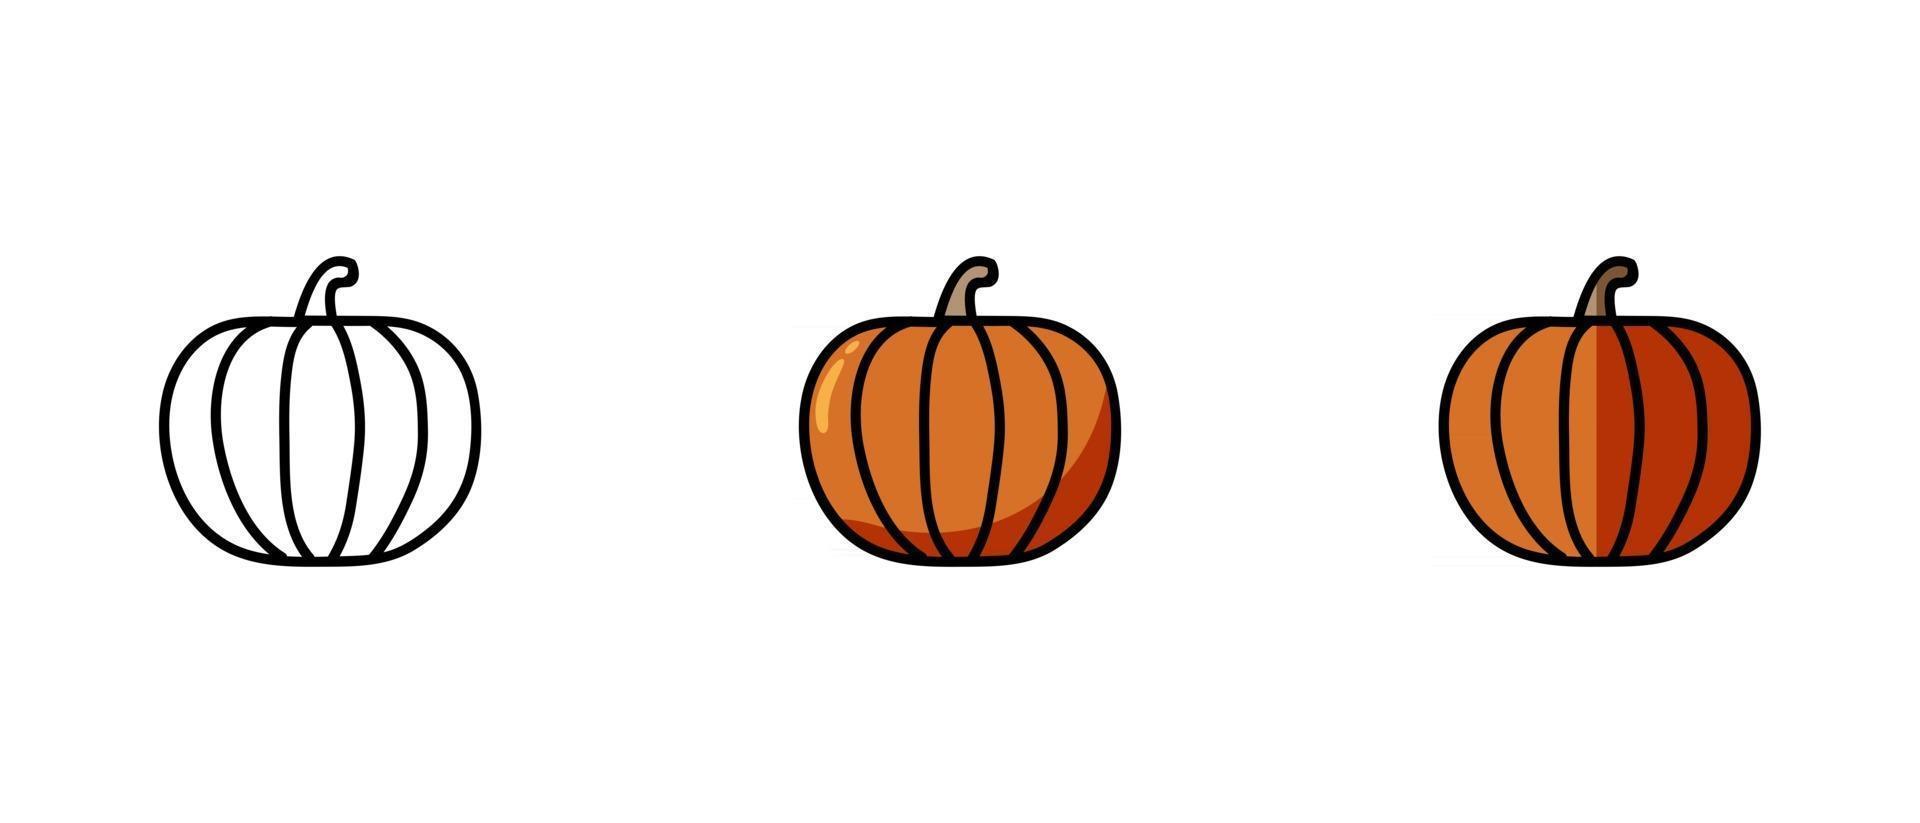 Contour and colored symbols of pumpkin vector